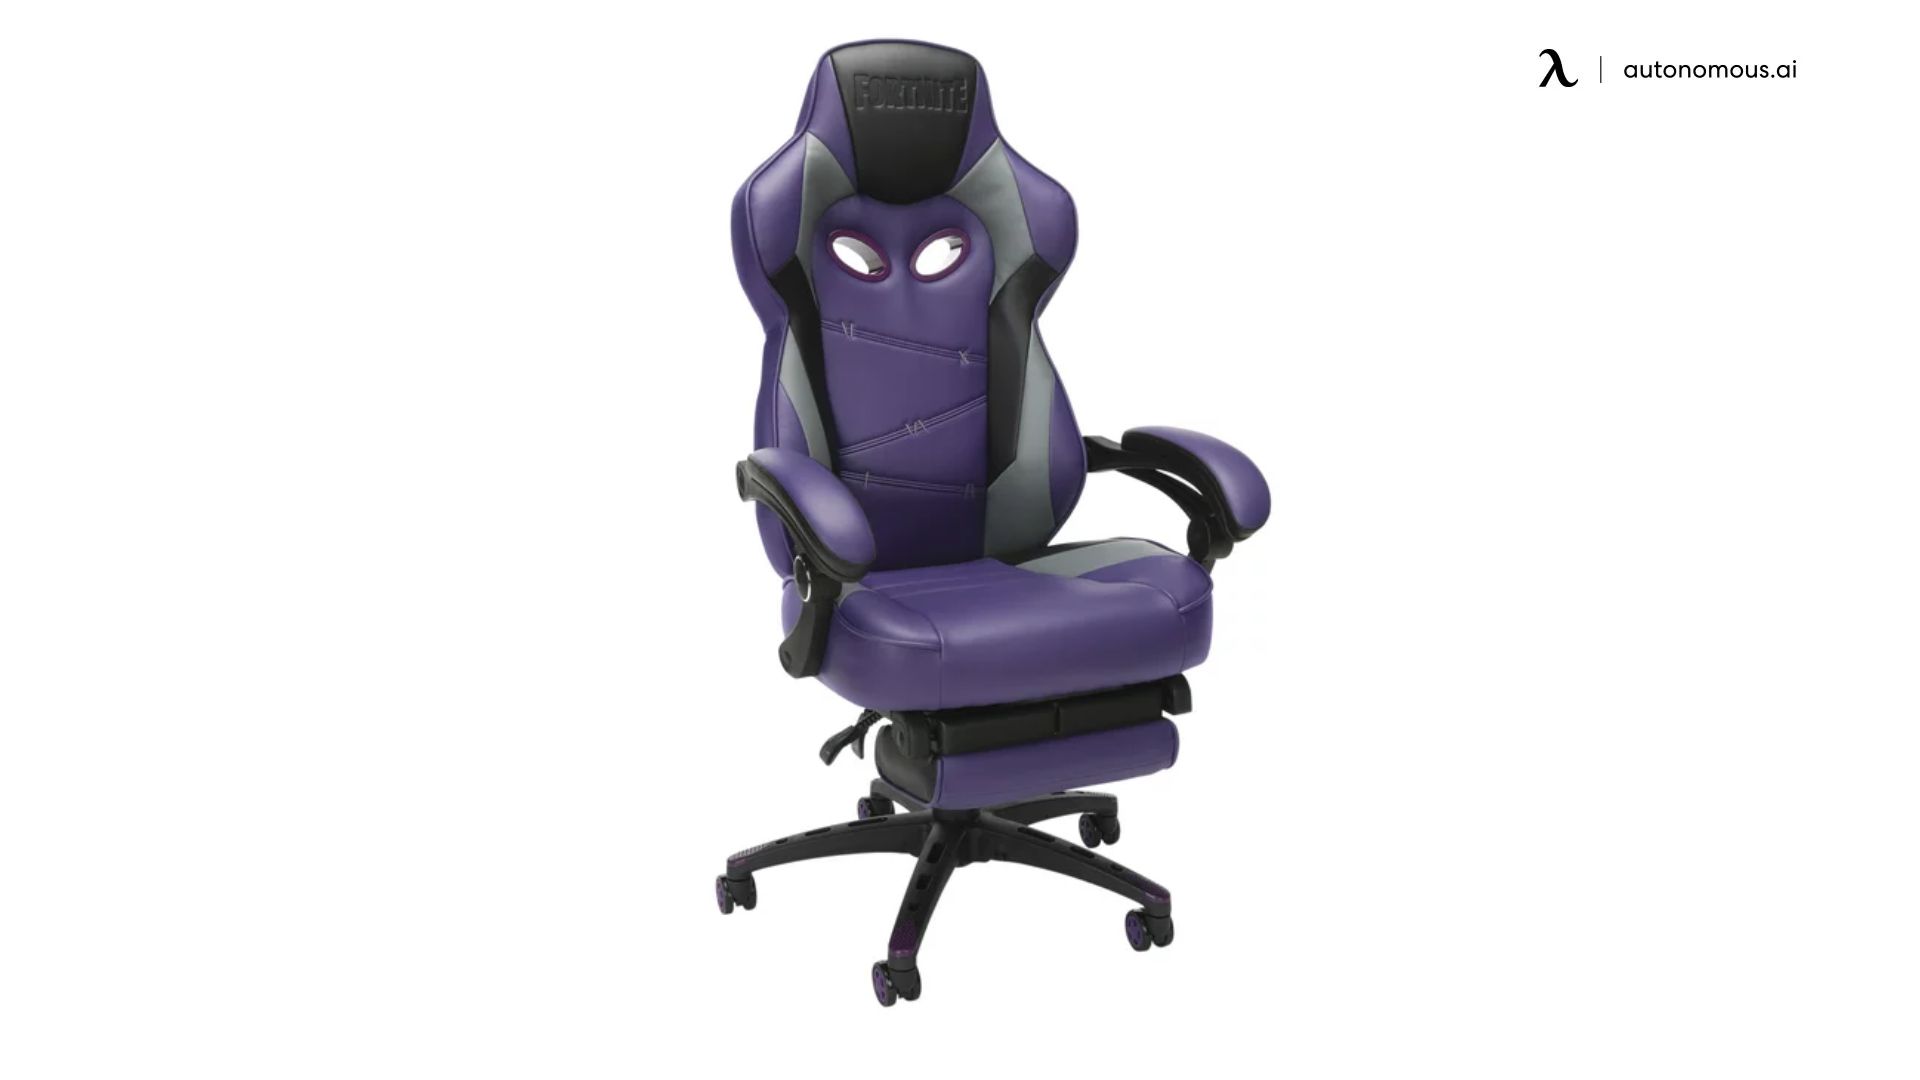 Fortnite RAVEN-Xi Gaming Chair